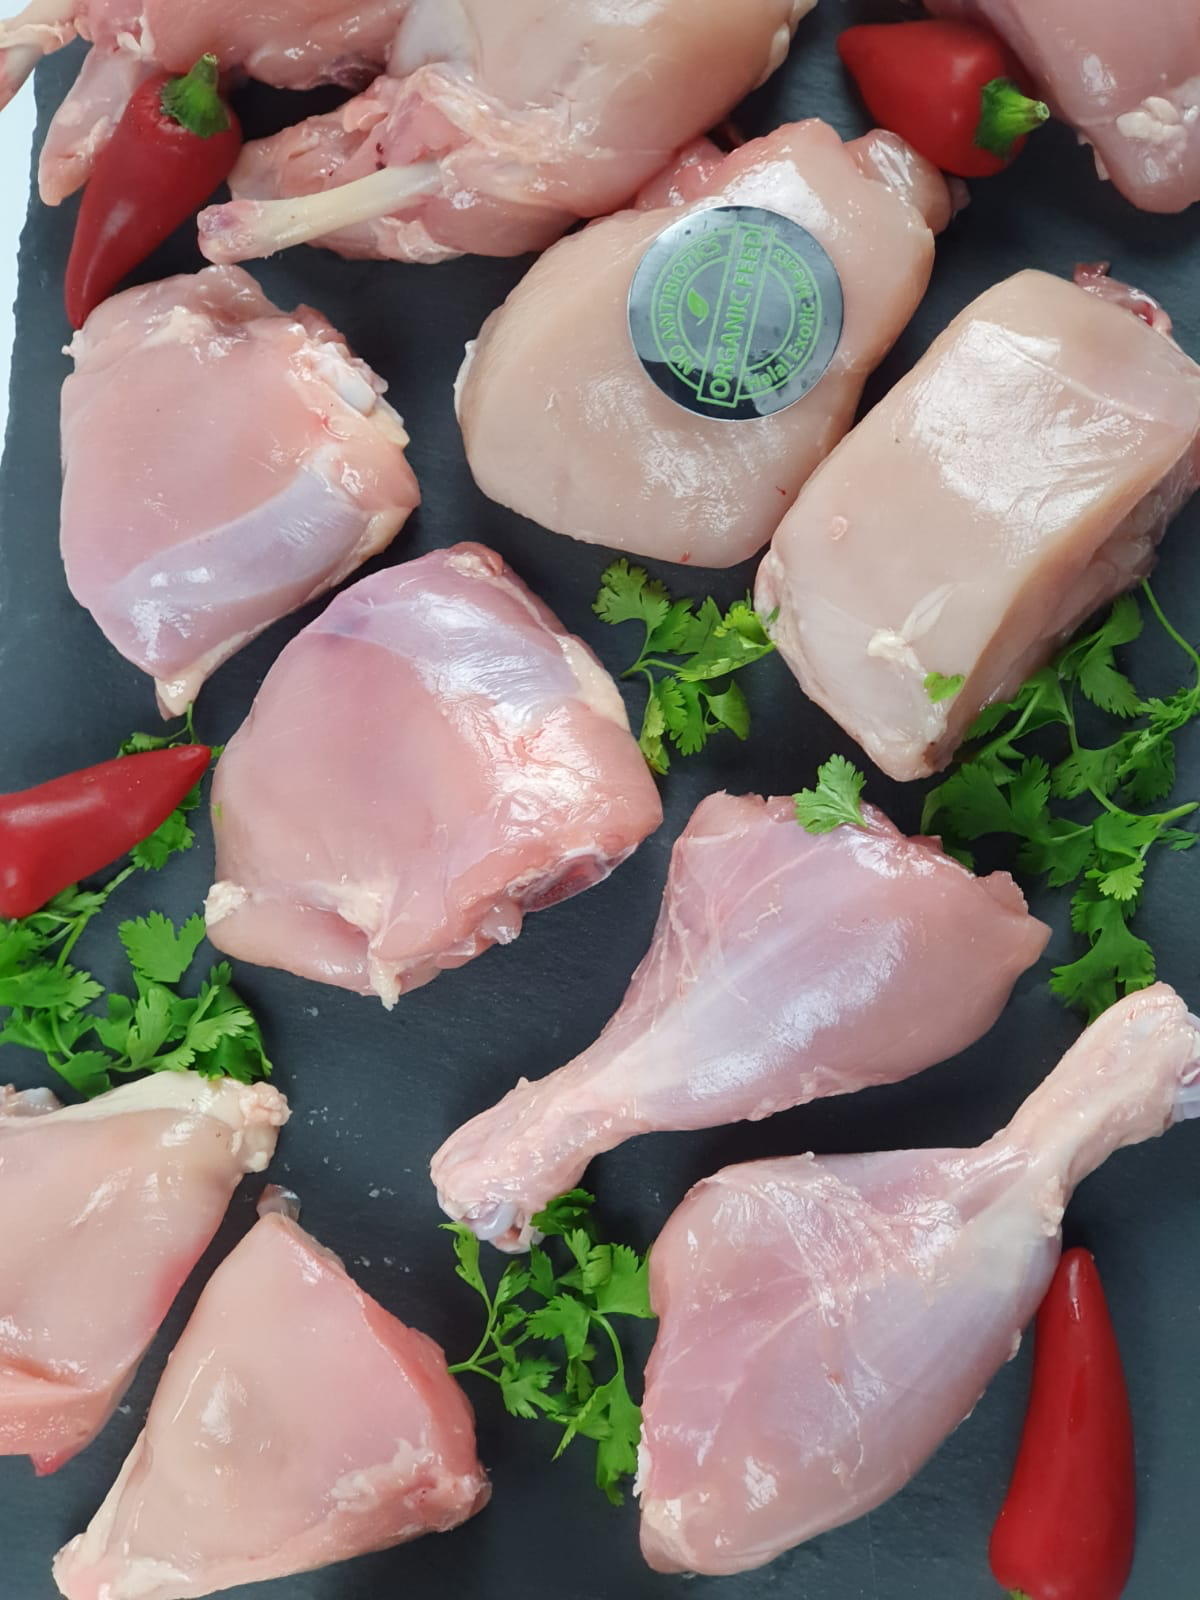 Halal Fresh Free Range Chickens without Skin - Cut (5pk)